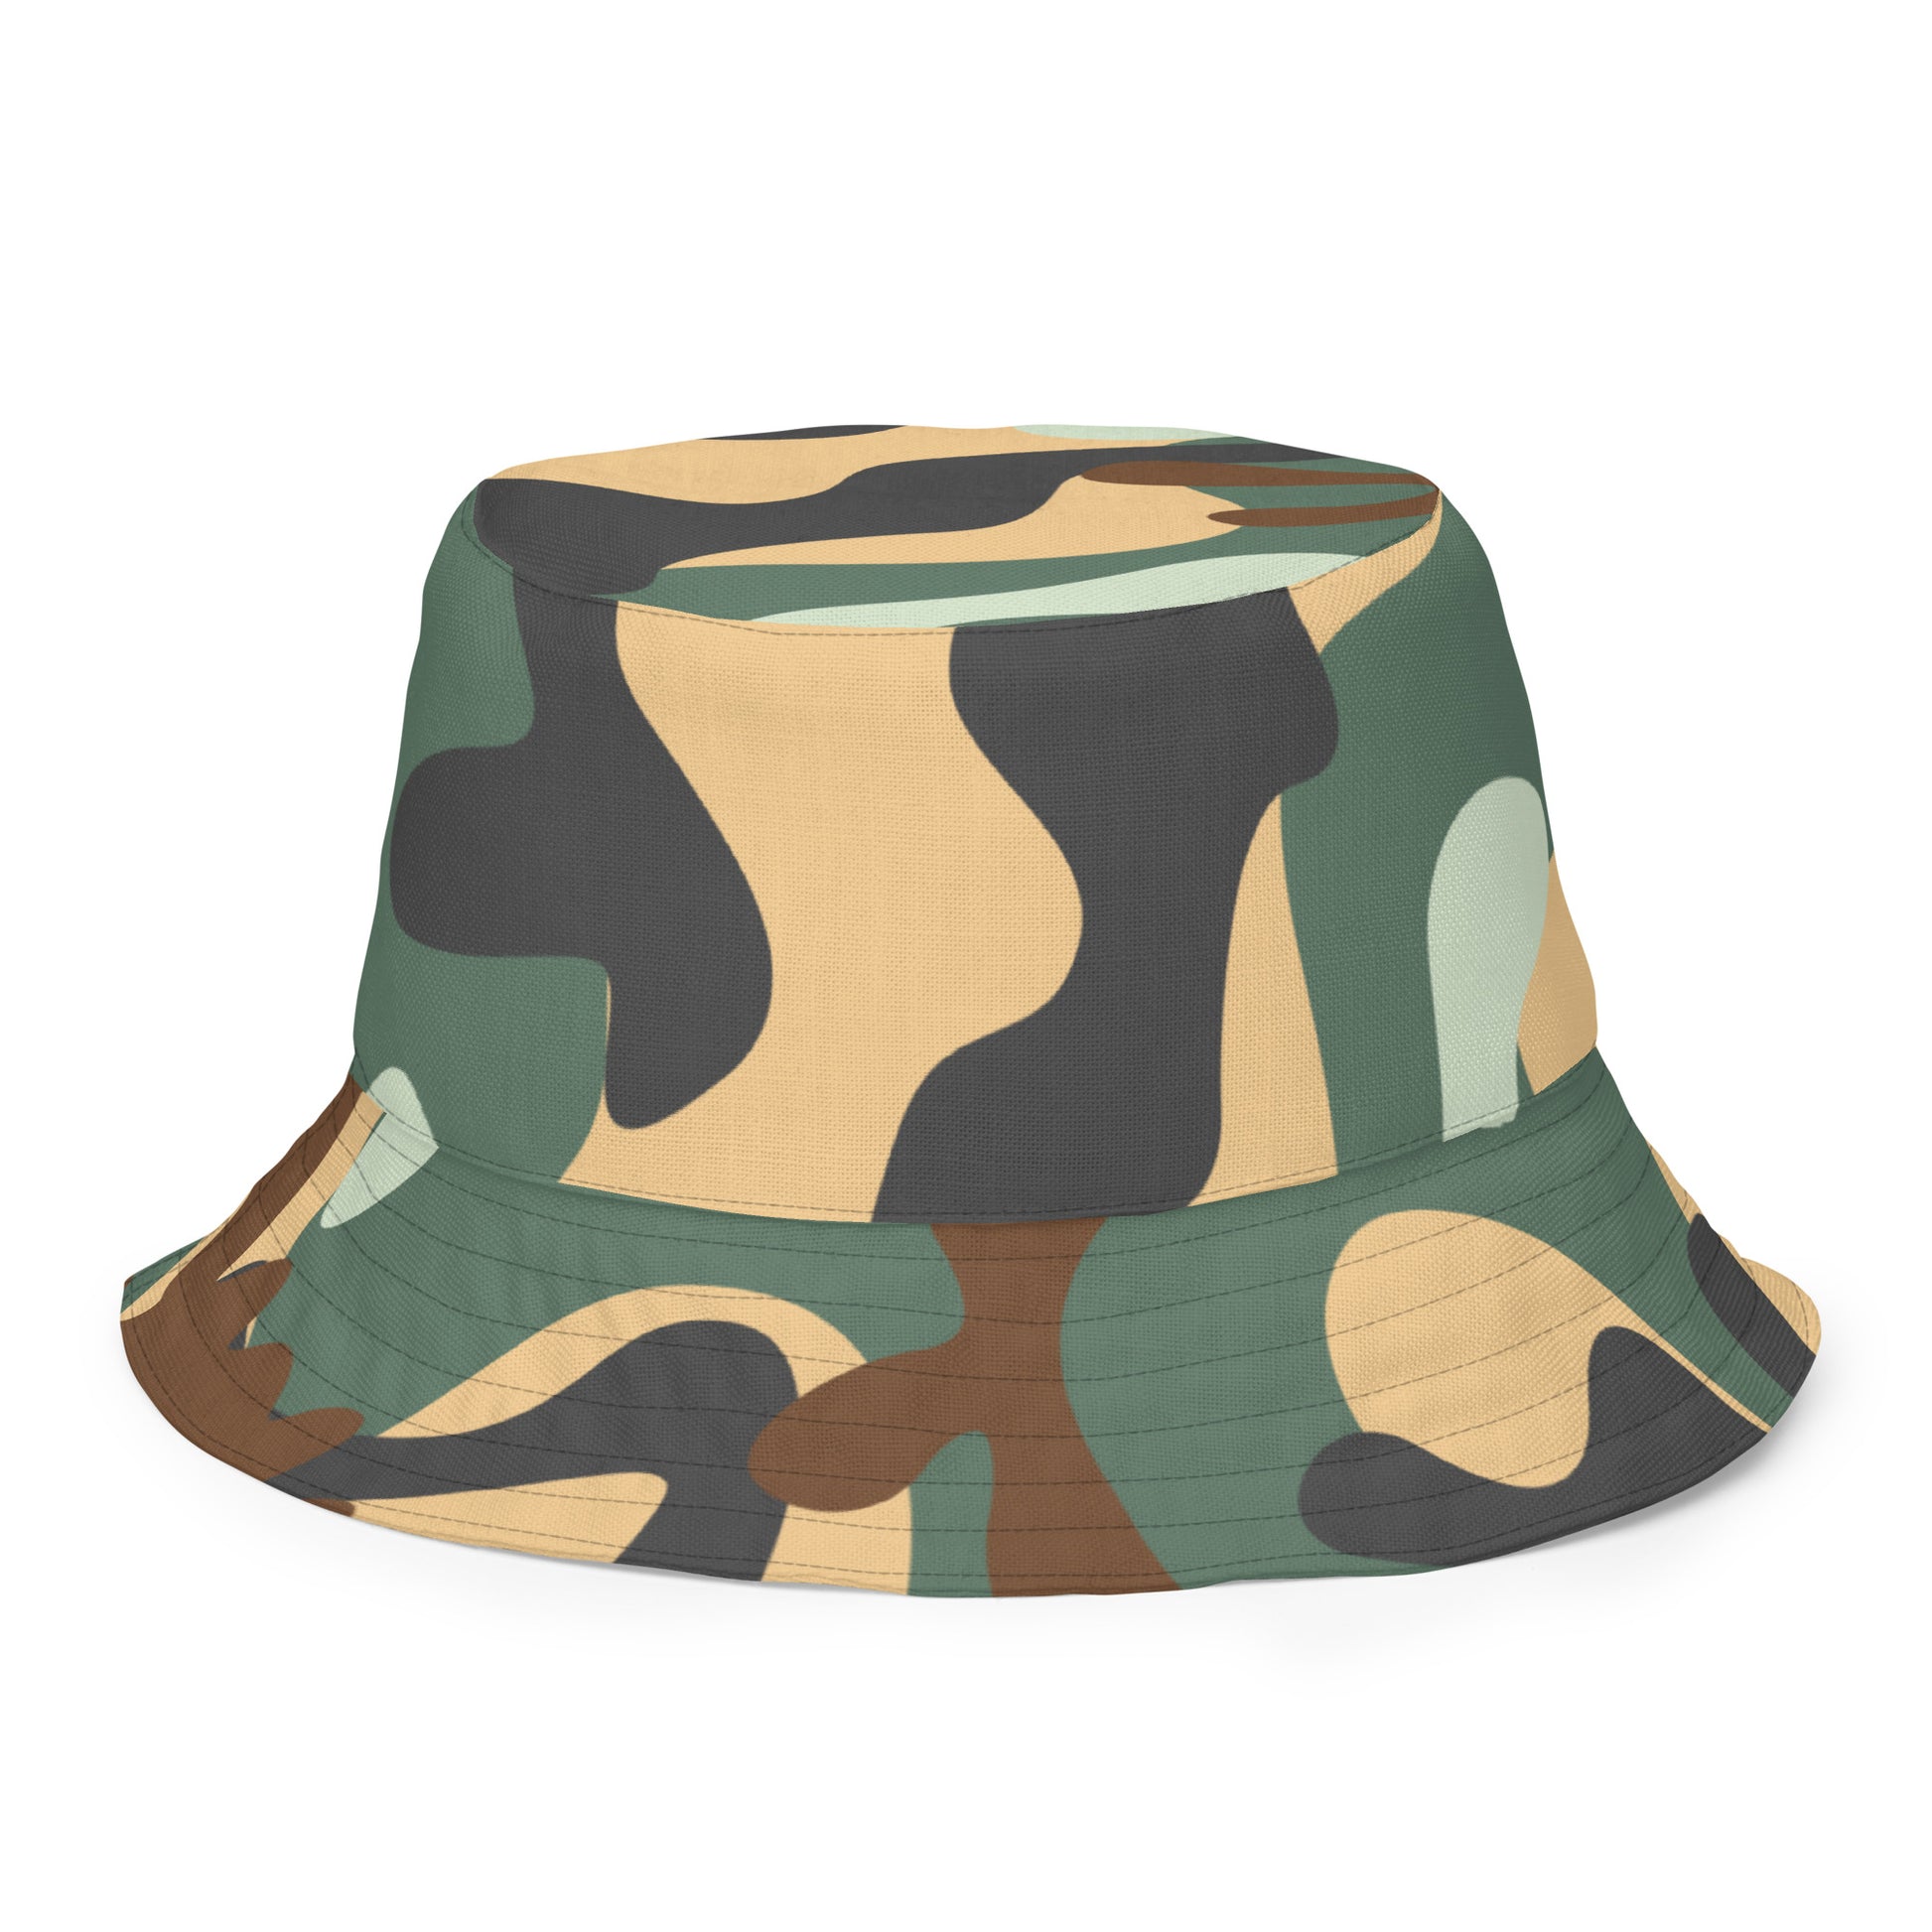 Humble Sportswear™ Pure Brown Duo Fit Reversible Bucket Hat Mireille Fine Art